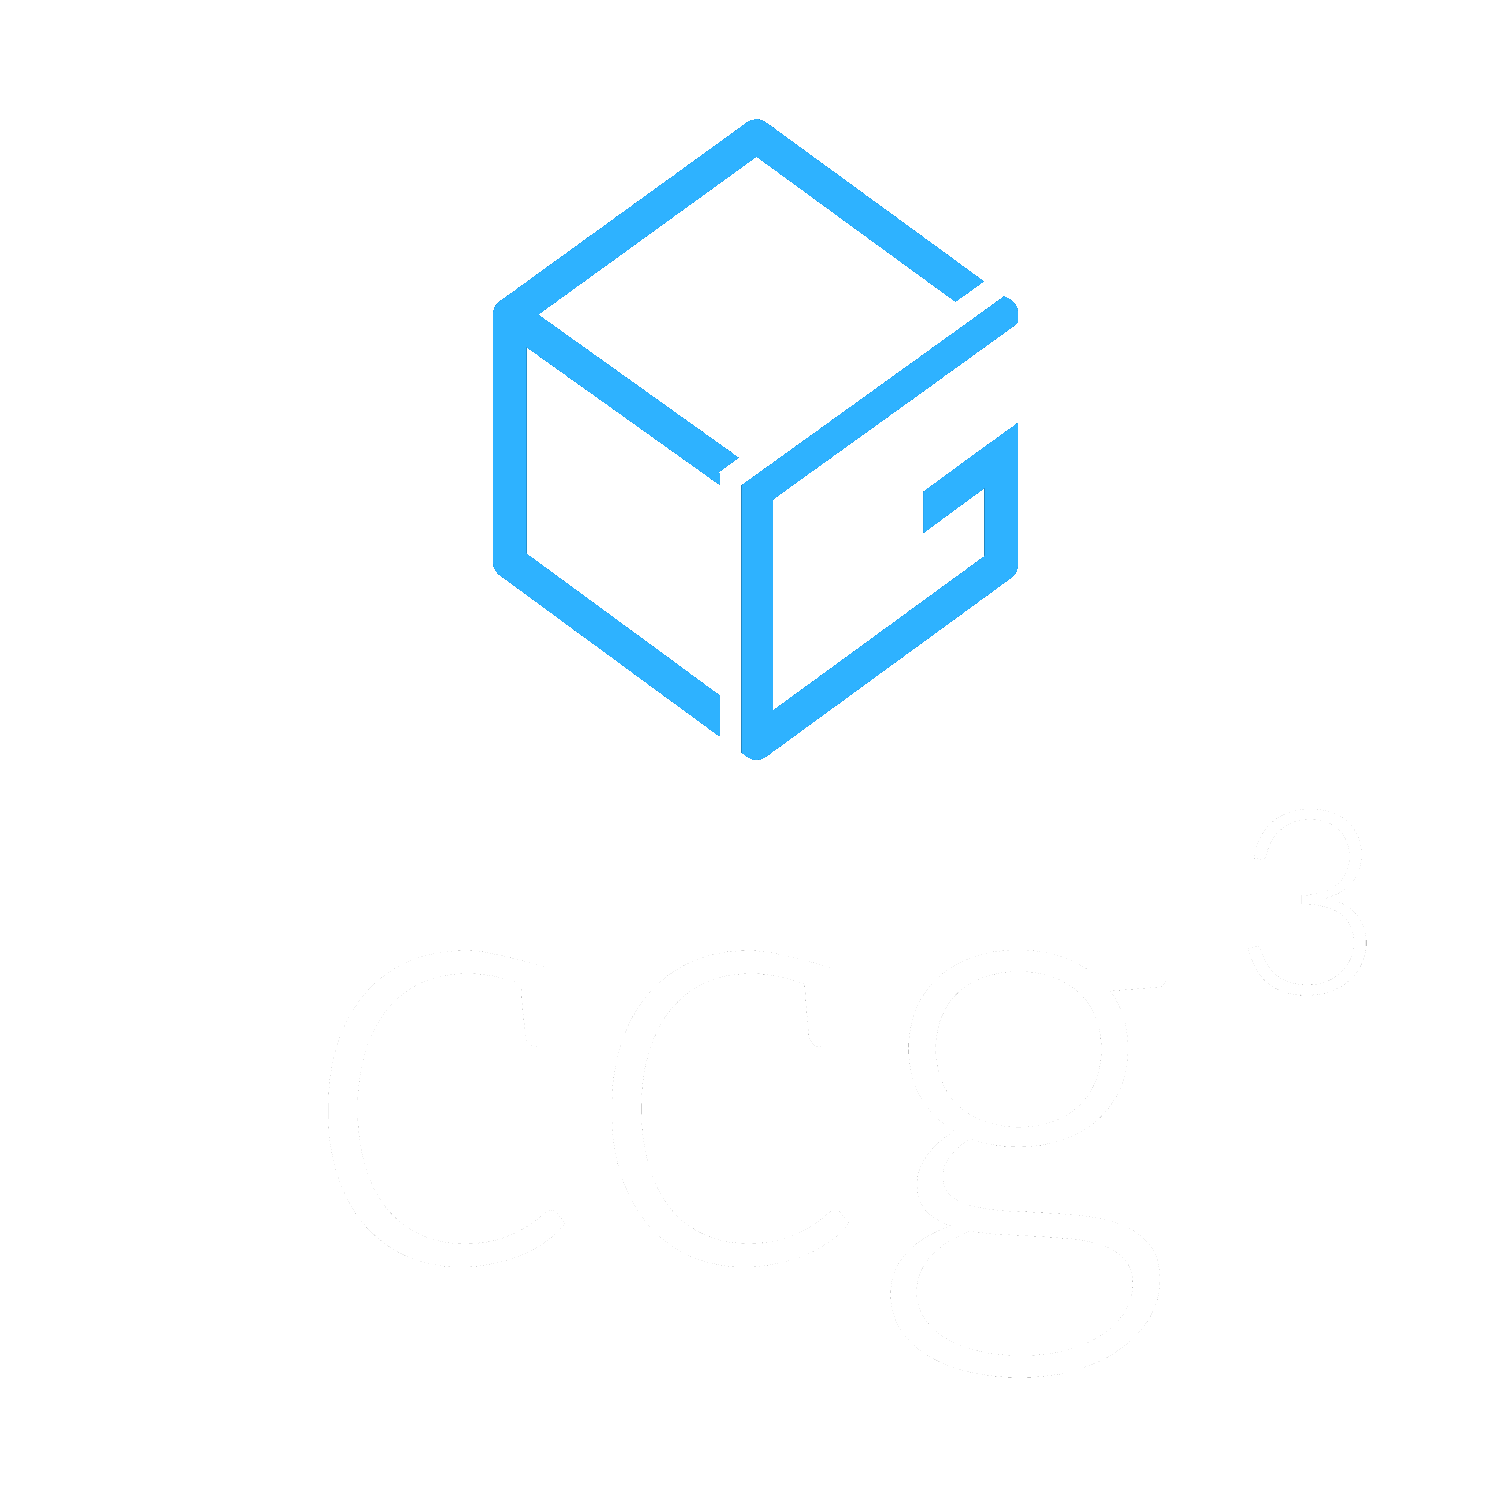 CCG3